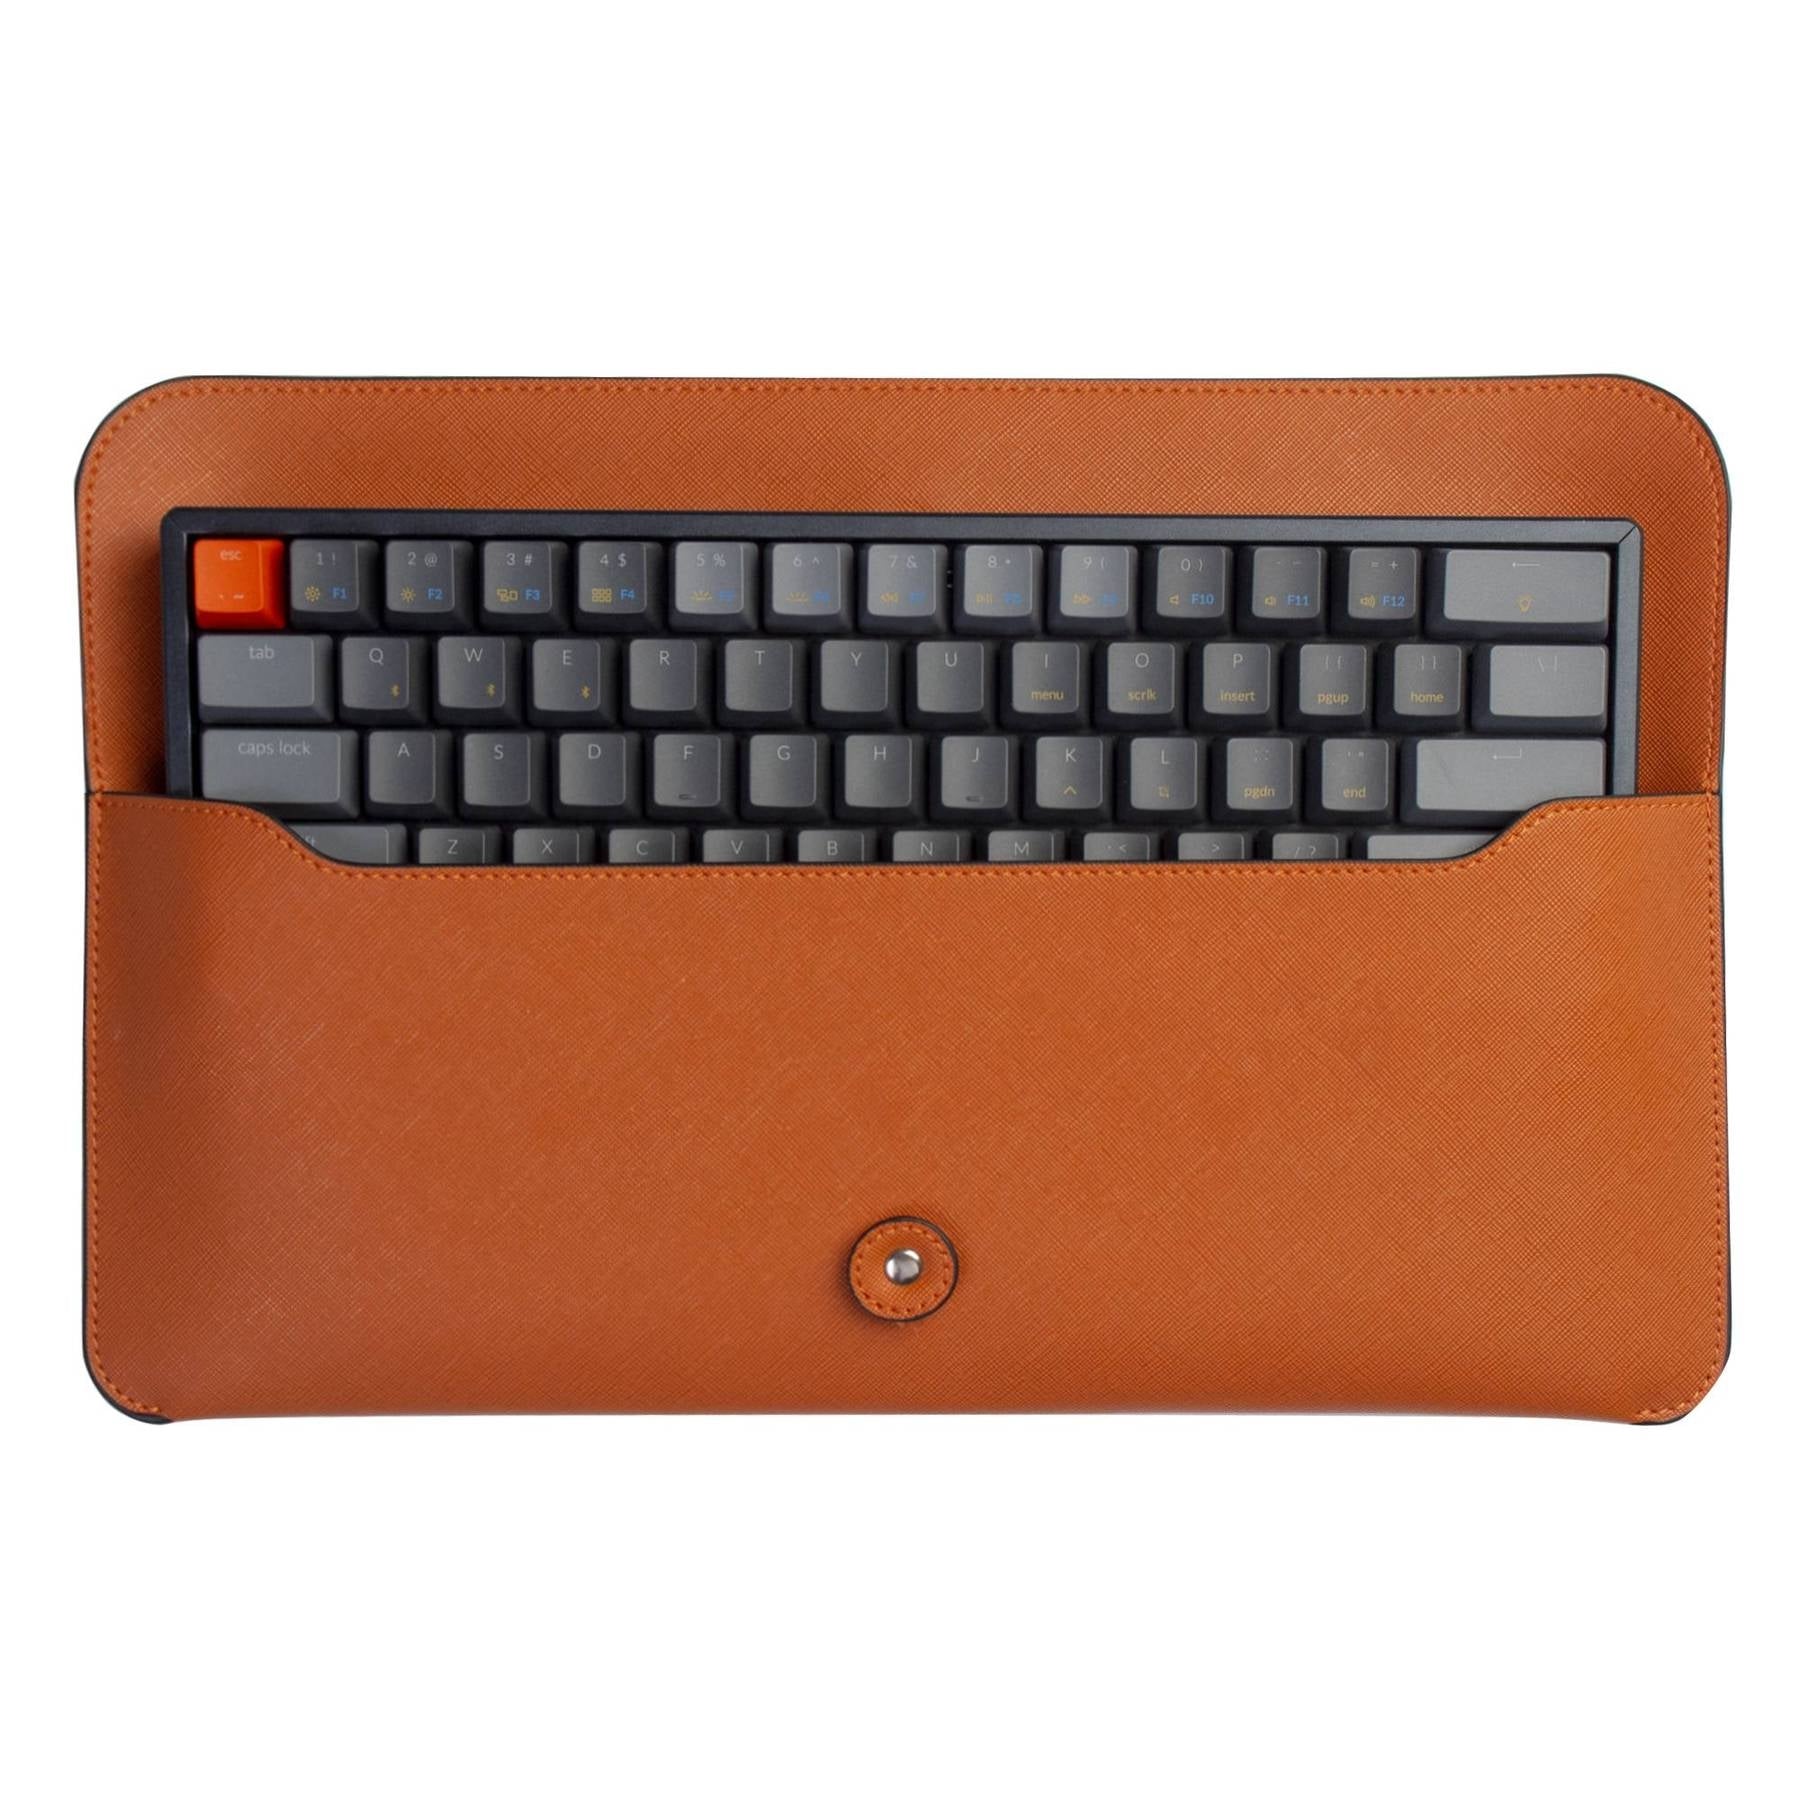 Keychron K3 / K12 Keyboard Bag - Orange Saffiano Leather Carrying Case MKVSTTIHQ0 |27342|